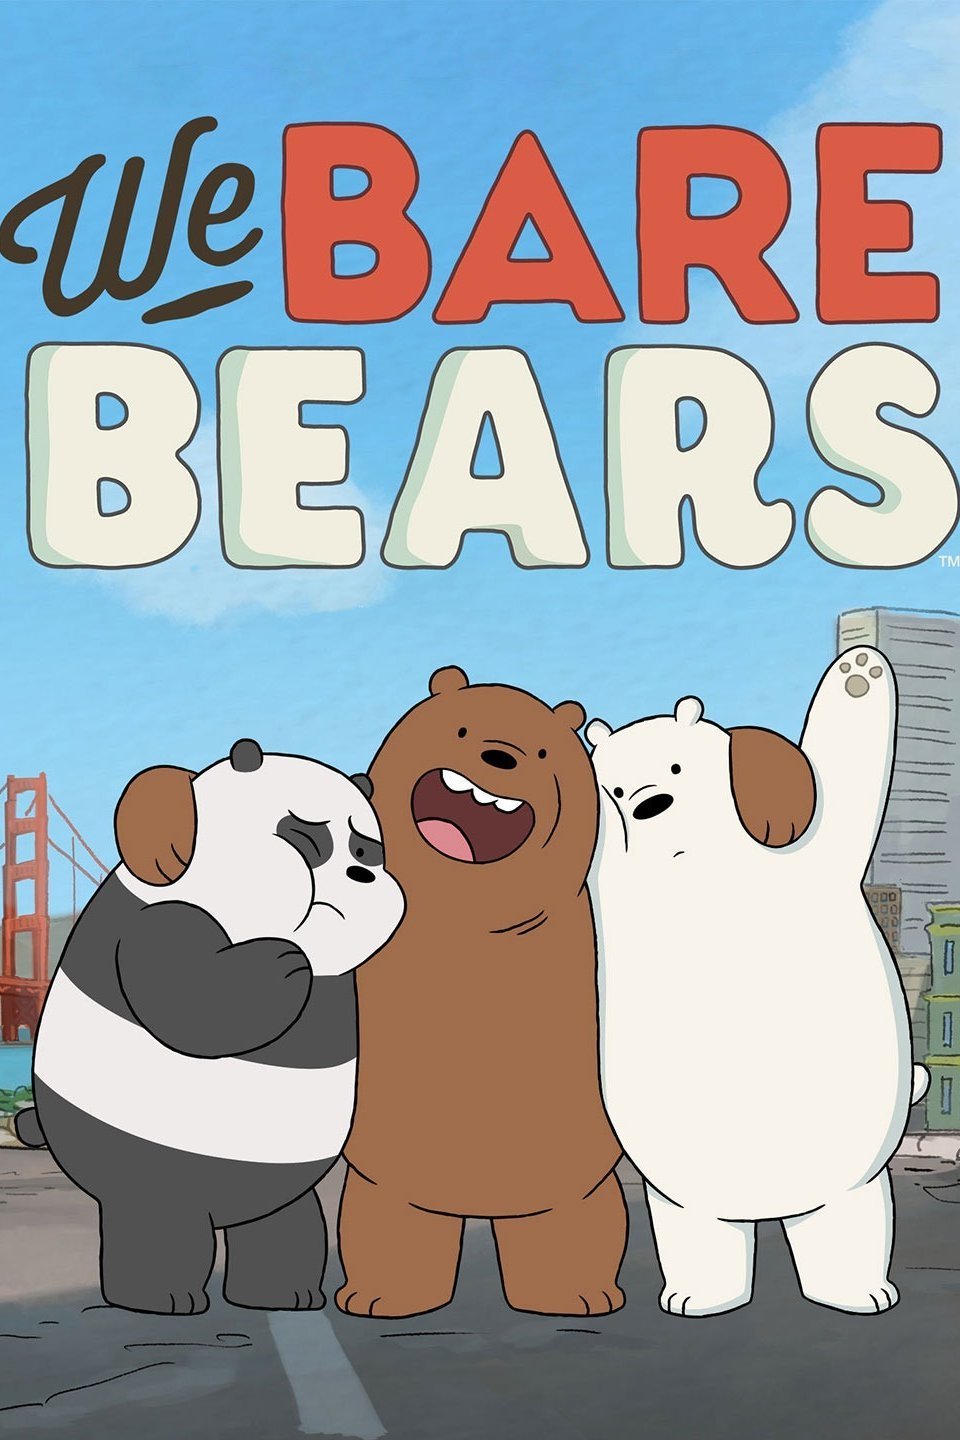 we bare bears : r/pokemon